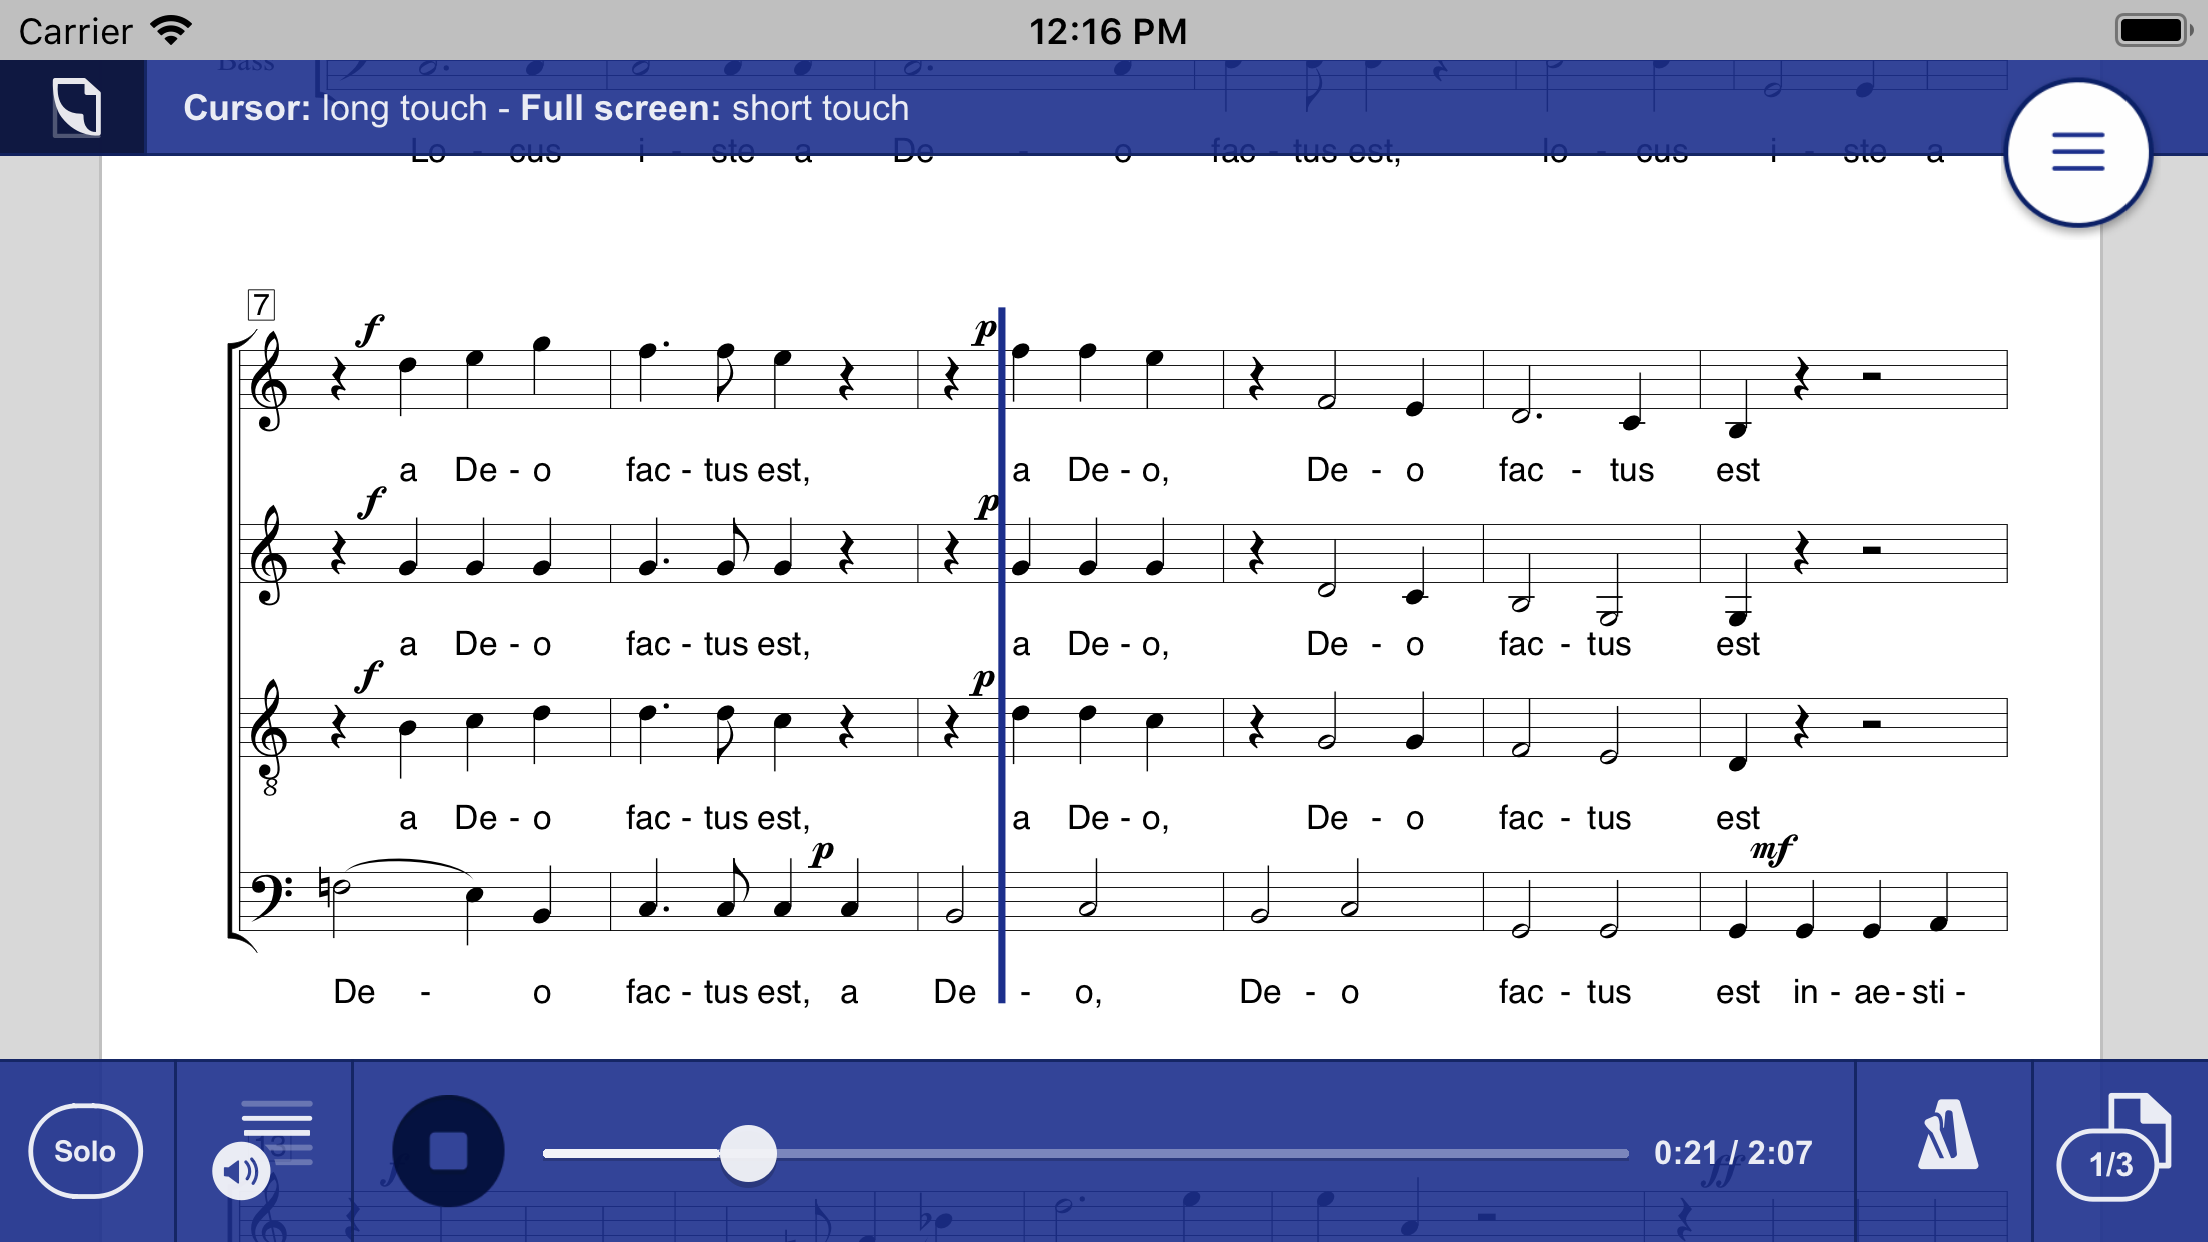 capella score reader App